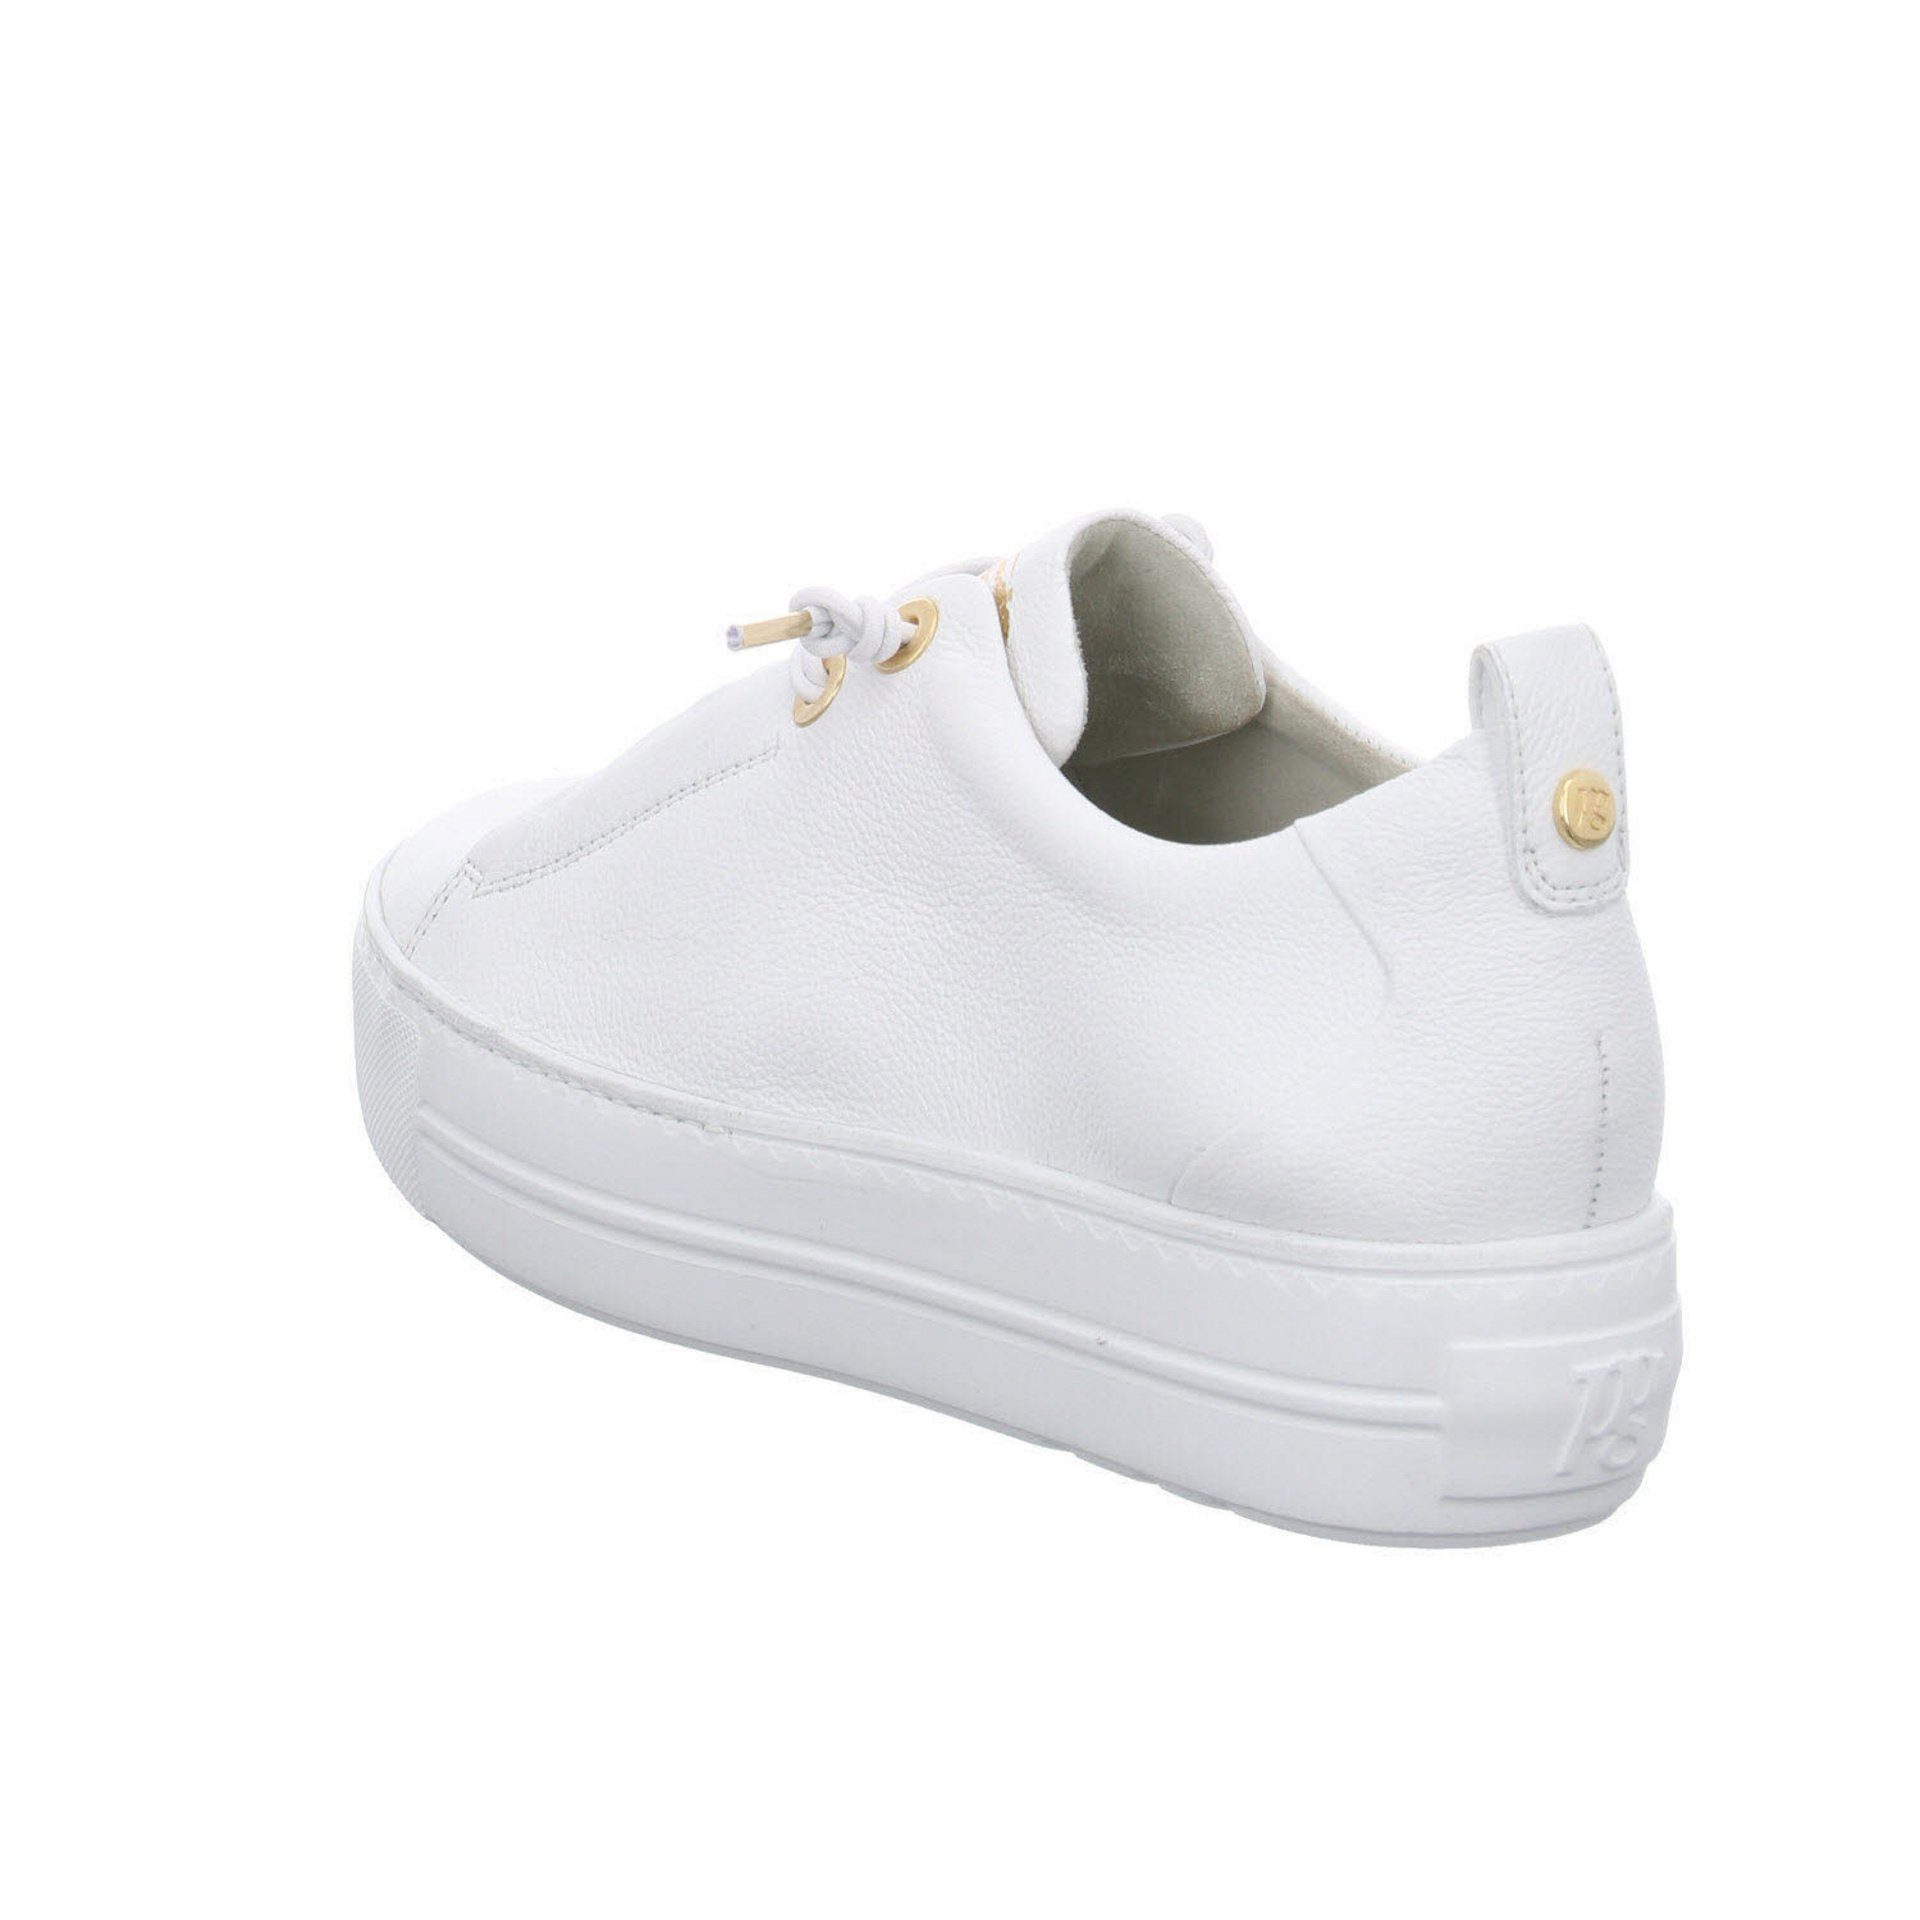 Schuhe Schnürschuh Slip-On Sneaker Sneaker Paul Damen white/gold Glattleder Green